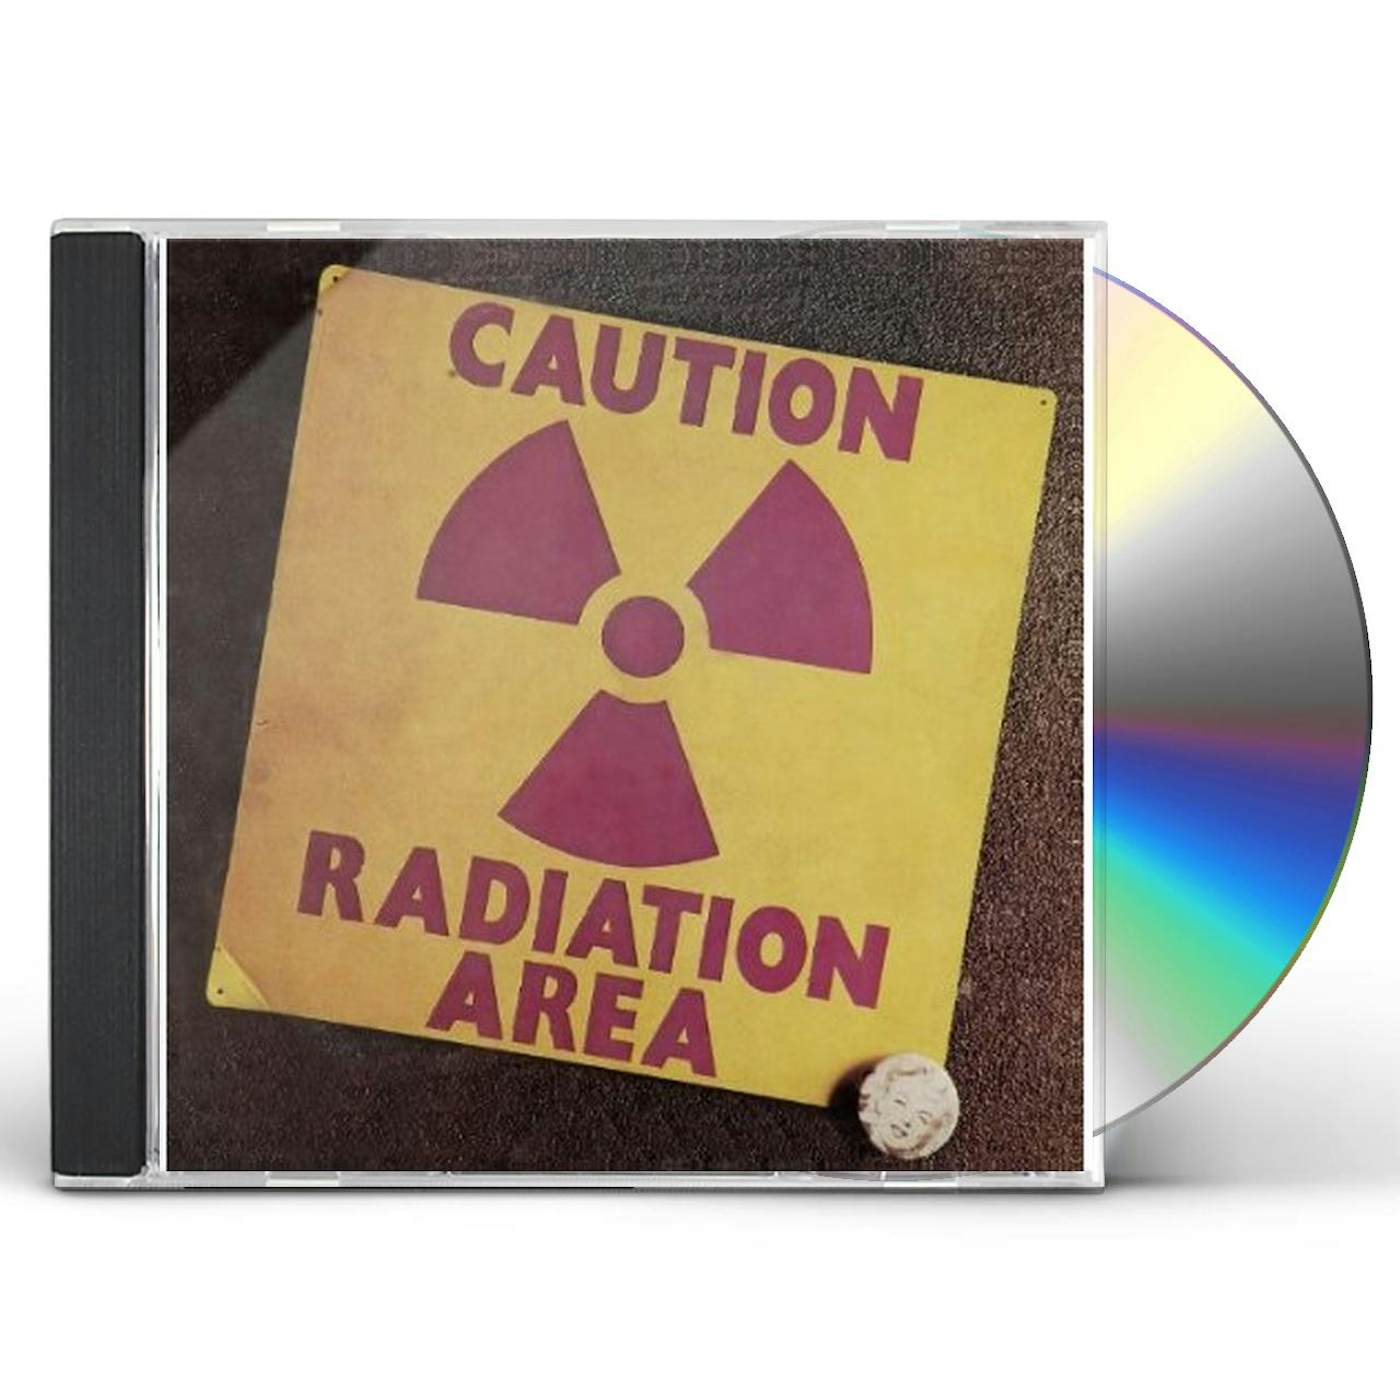 CAUTION RADIATION AREA CD